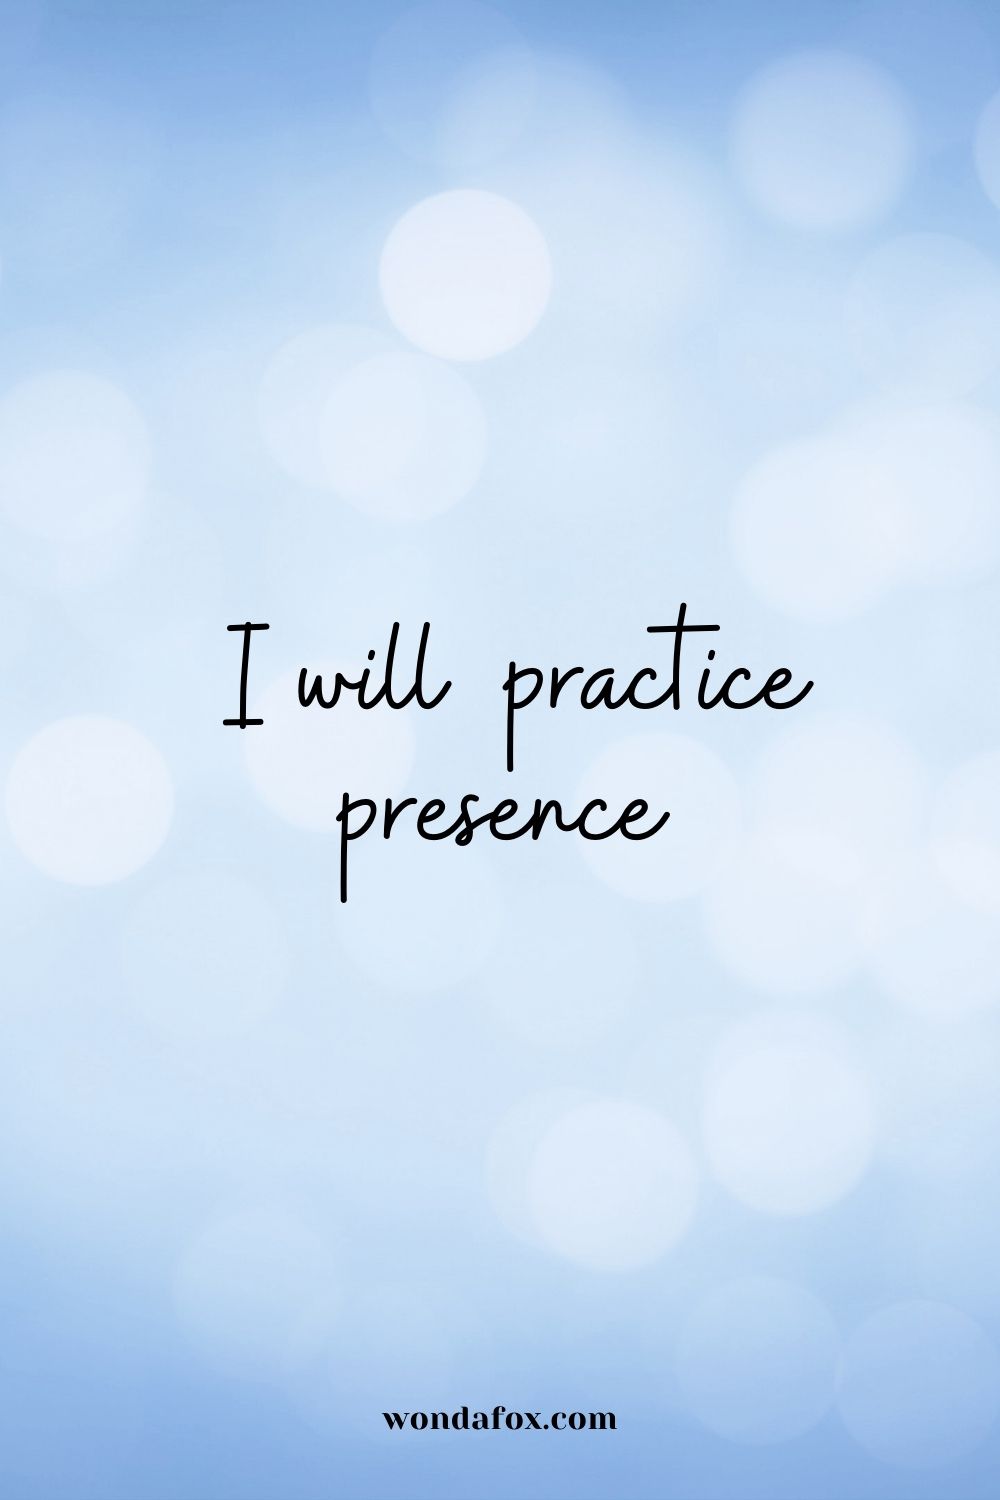  I will practice presence